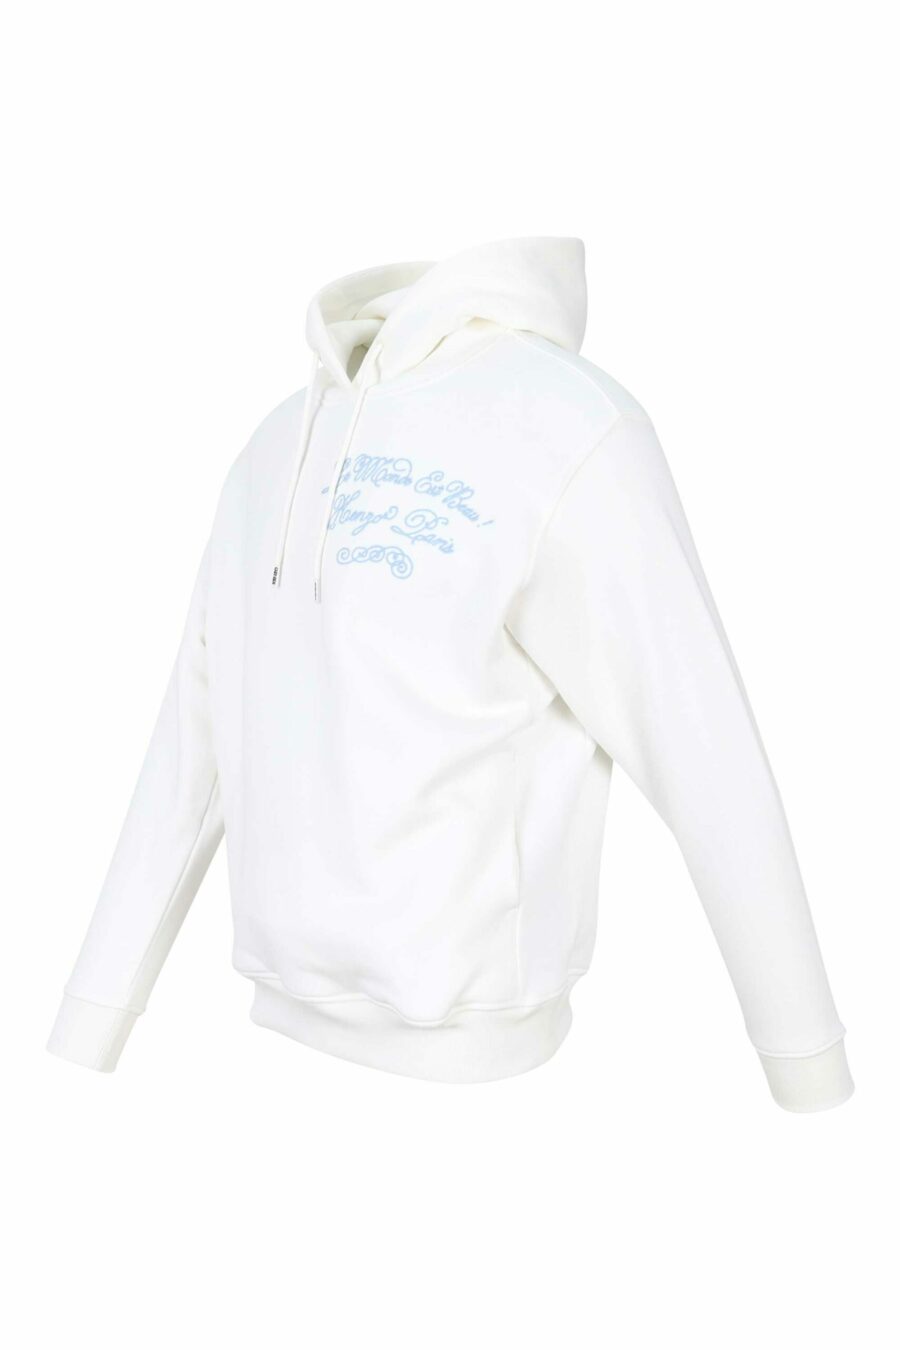 White hooded sweatshirt with mini logo "kenzo travel" - 3612230515765 1 1 scaled